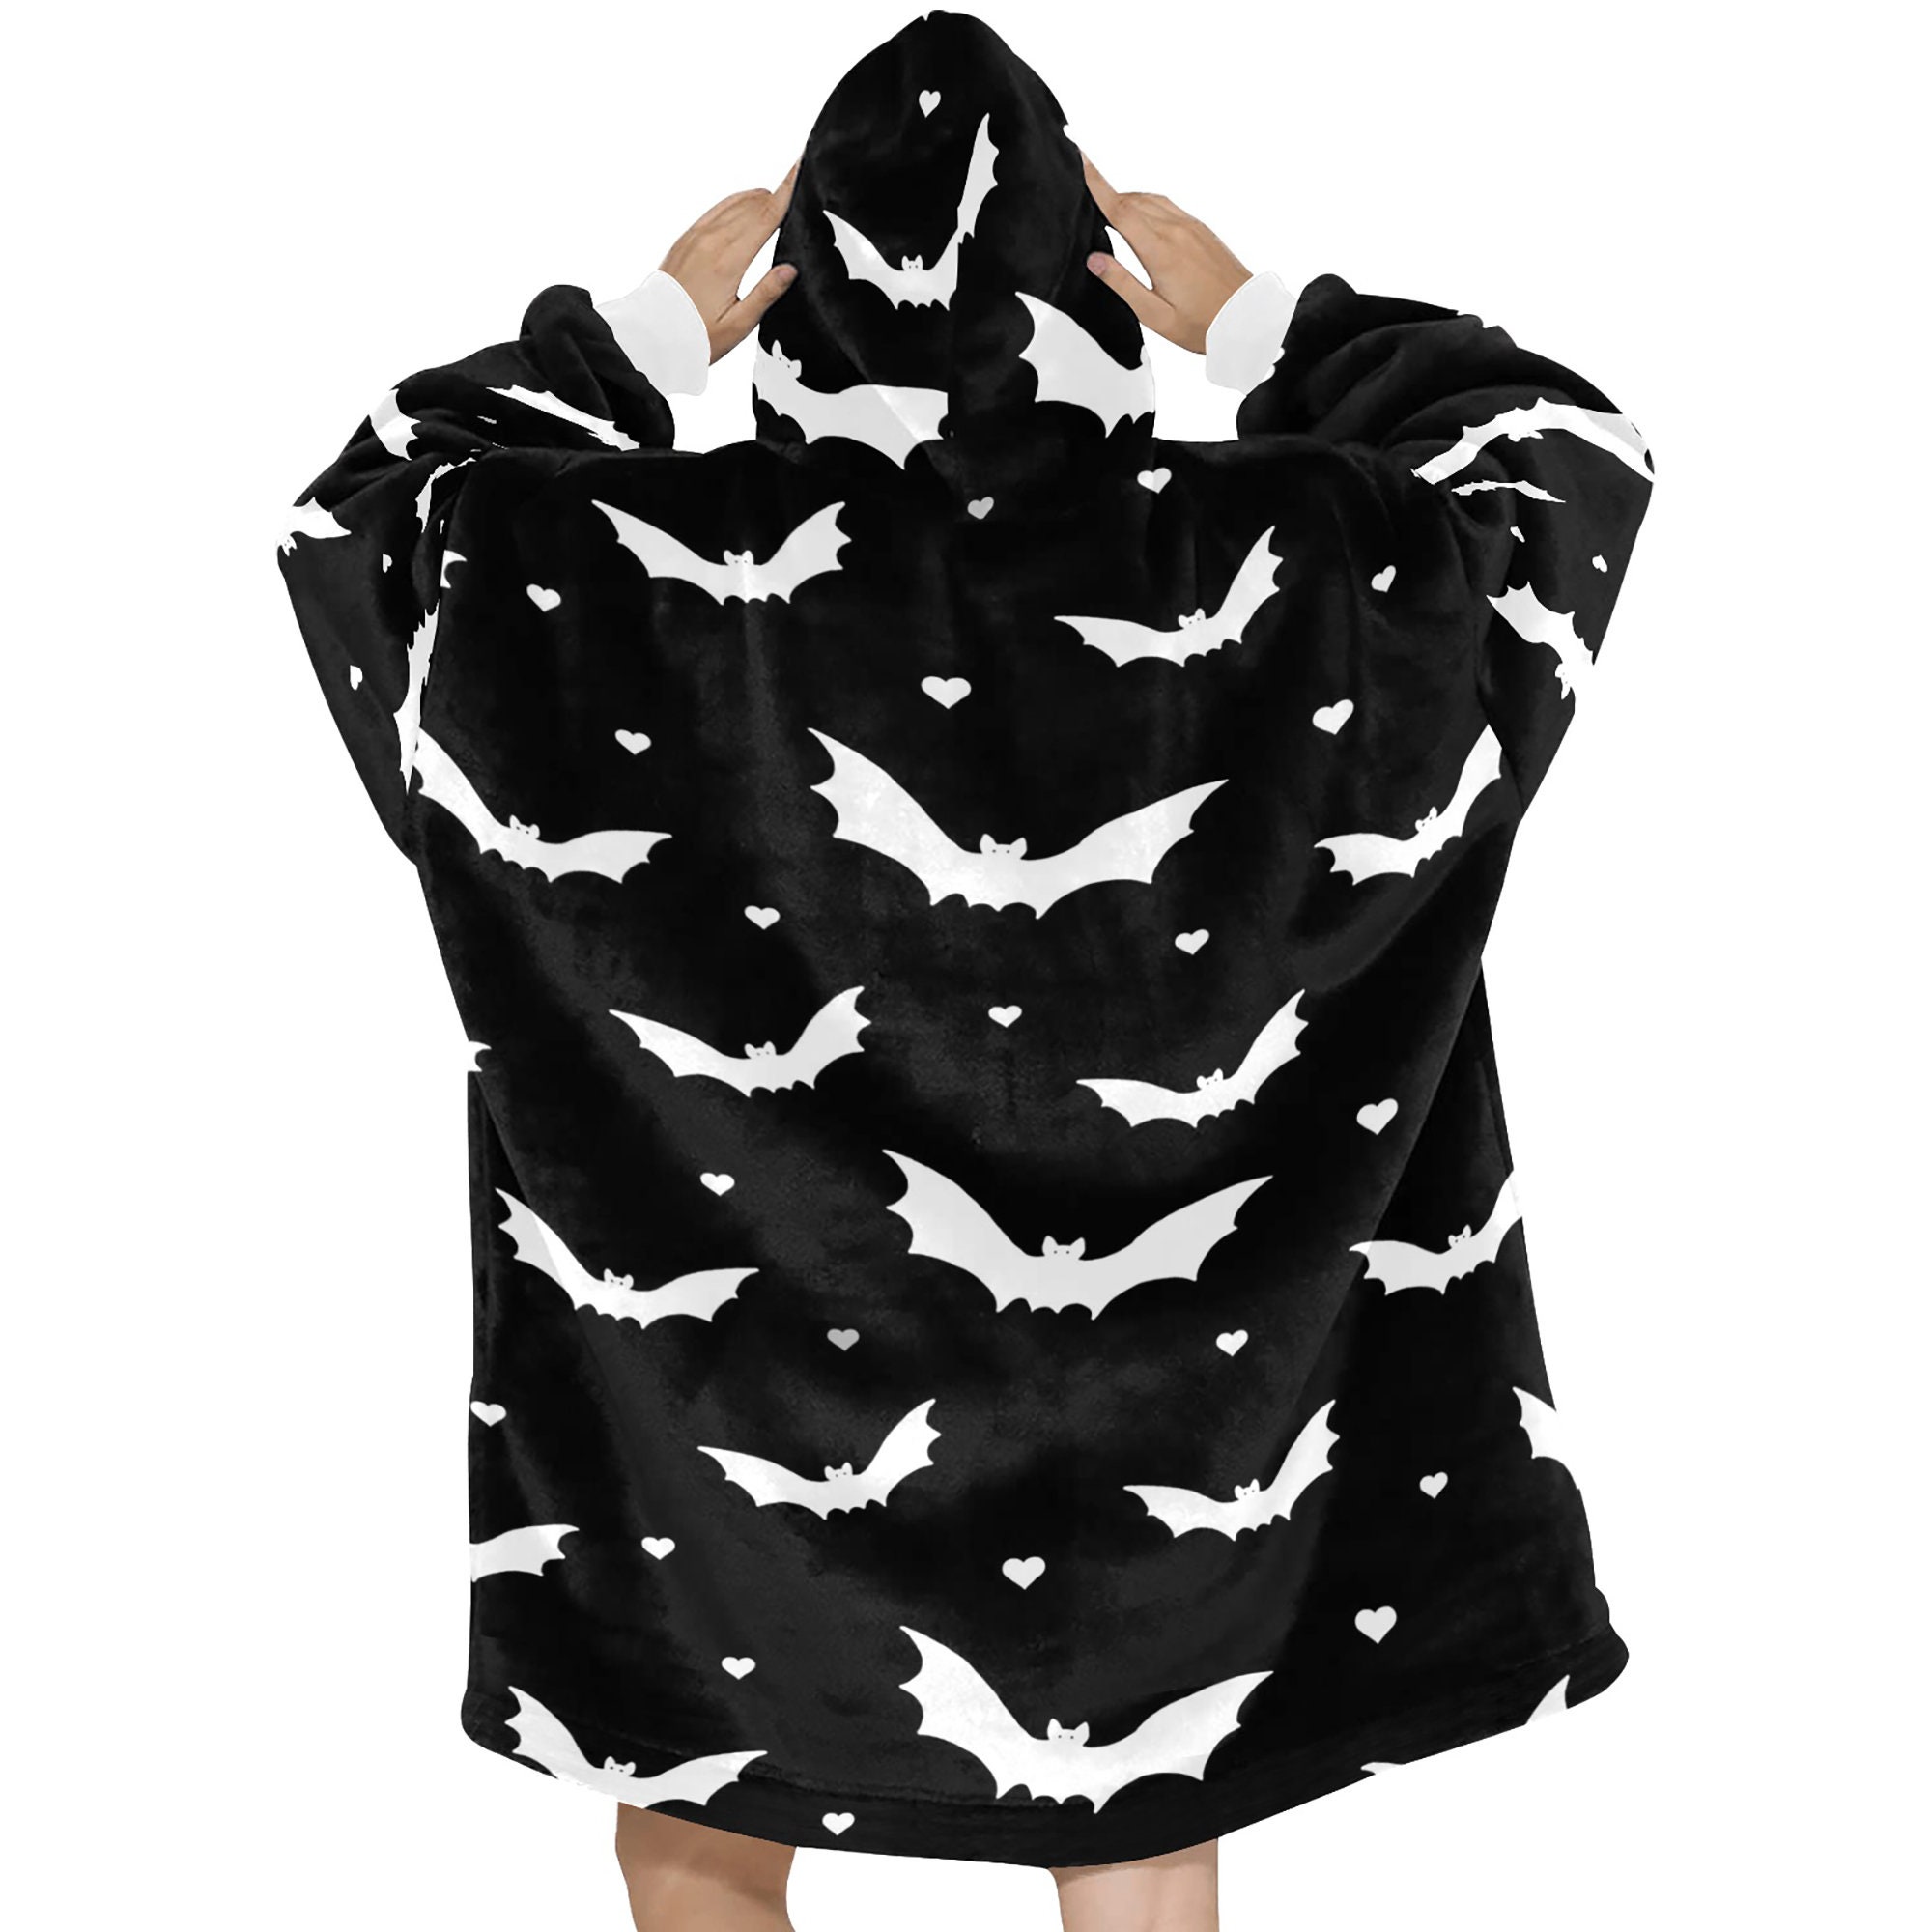 Black Bats Spooky Halloween Theme Blanket Hooded